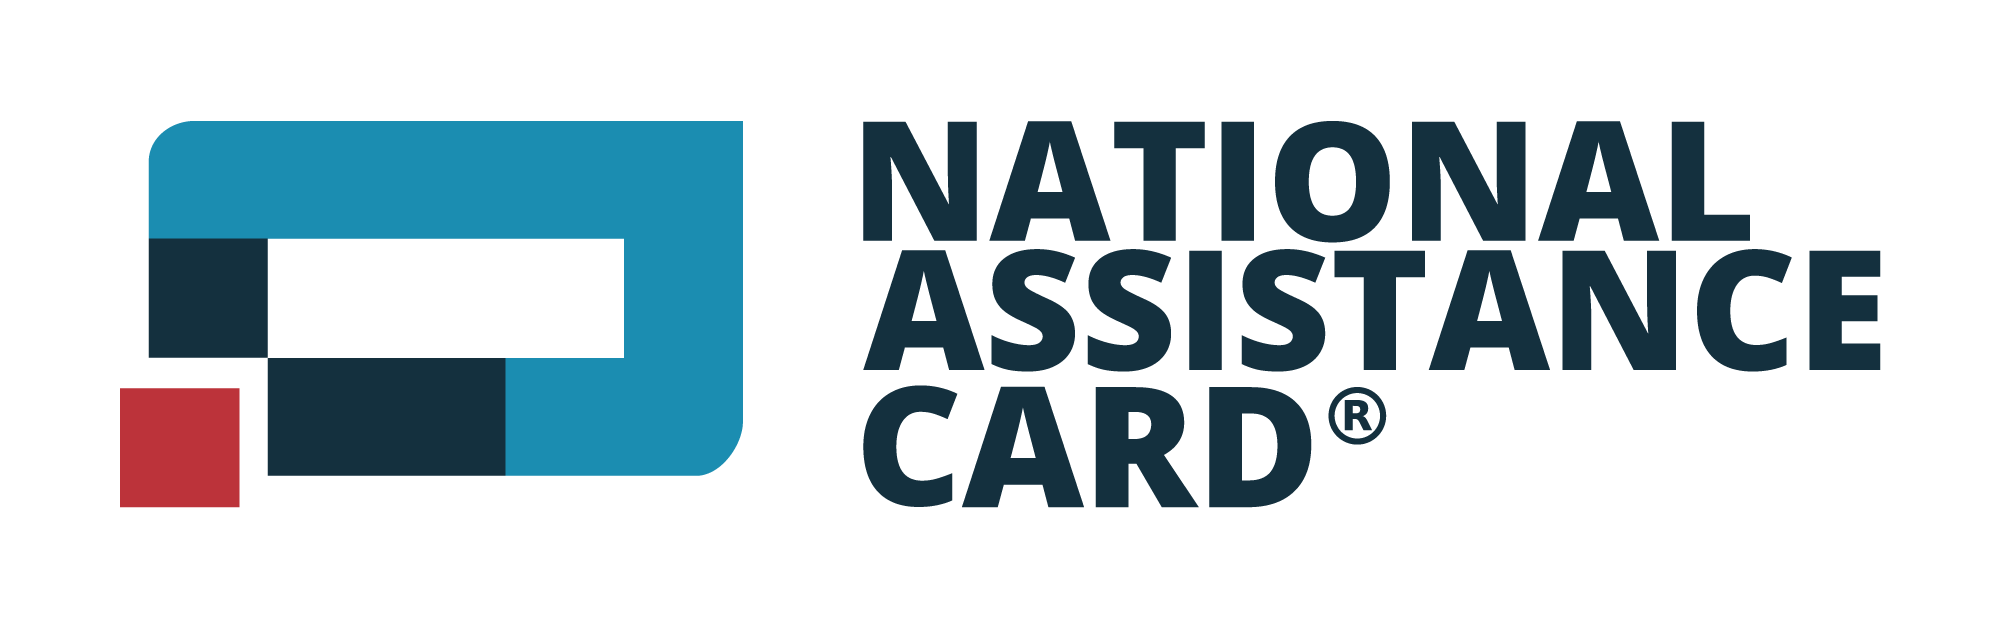 National Assistance Card logo